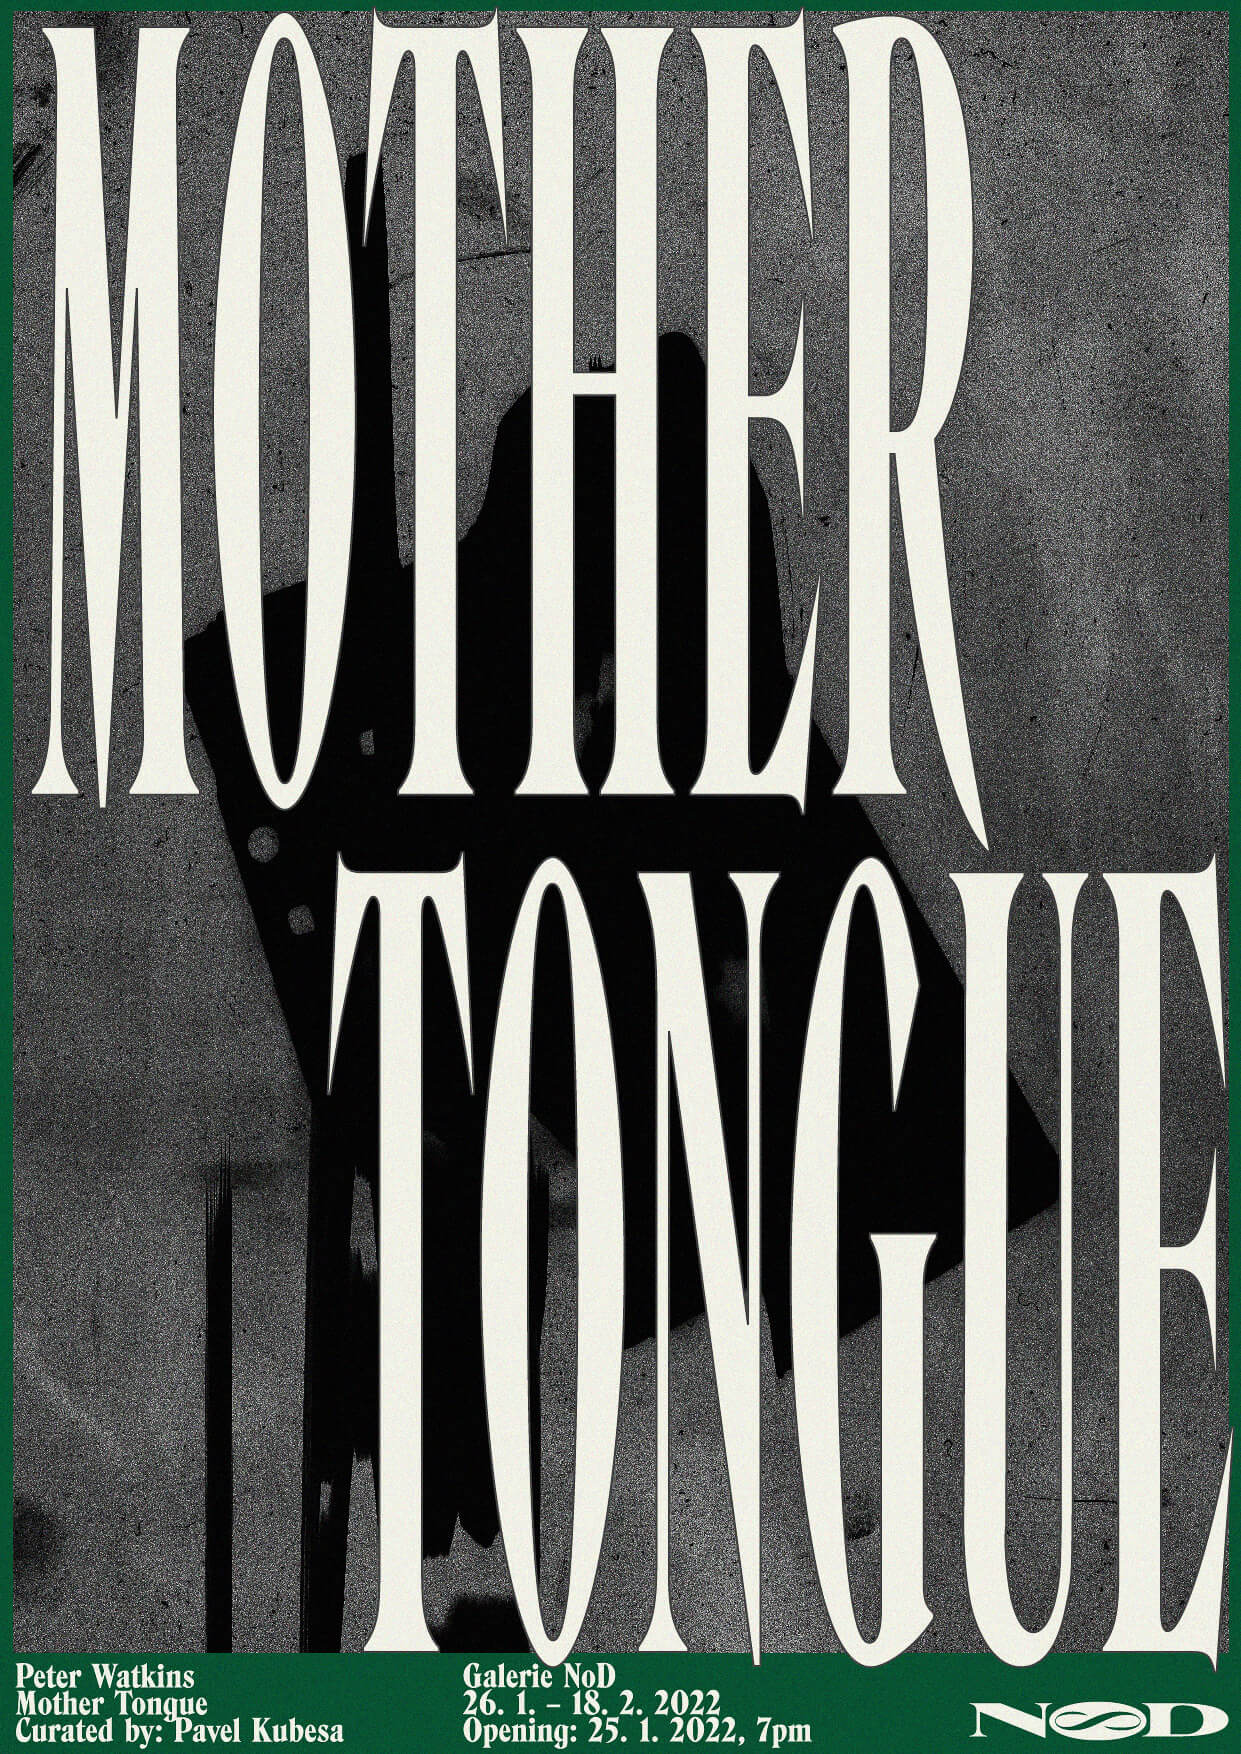 Peter Watkins Mother Tongue Galerie NoD 2022